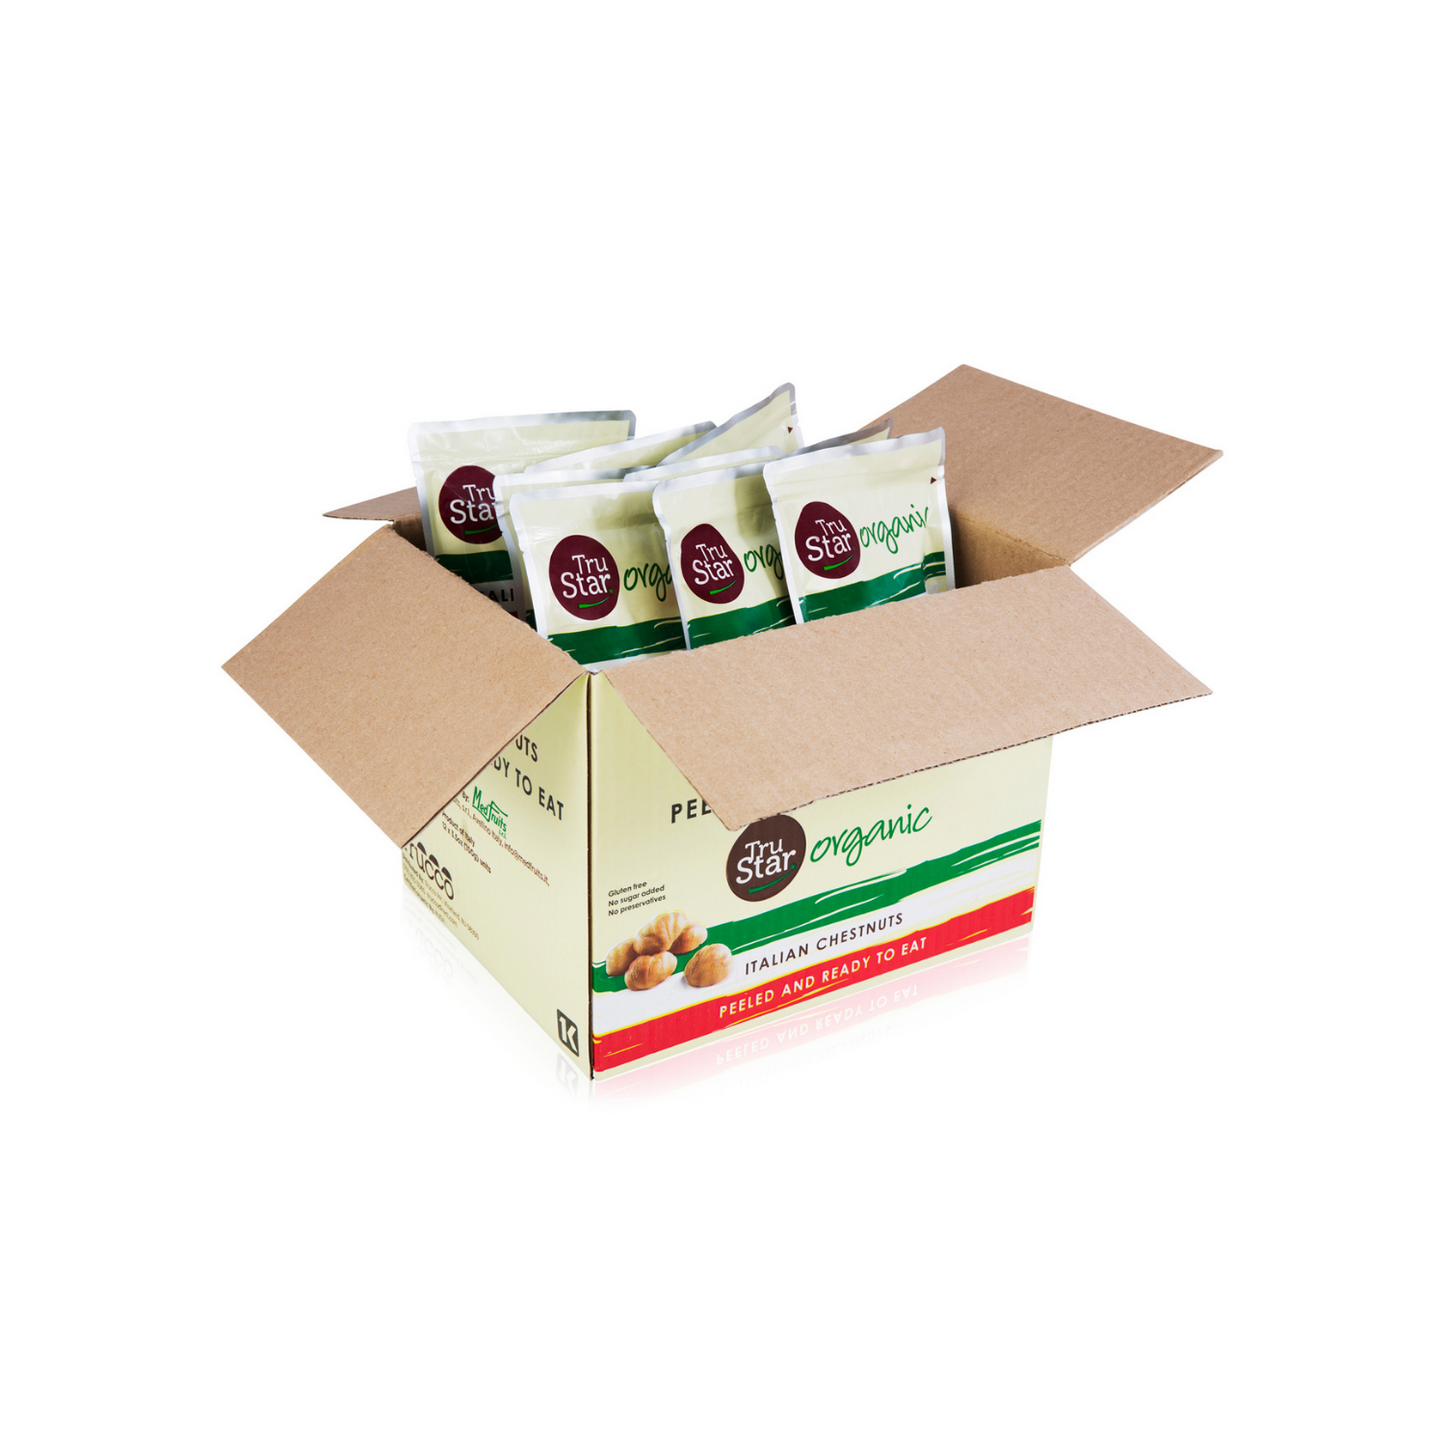 TruStar Organic Italian Chestnuts Peeled and Ready to Eat 12 Pack Box